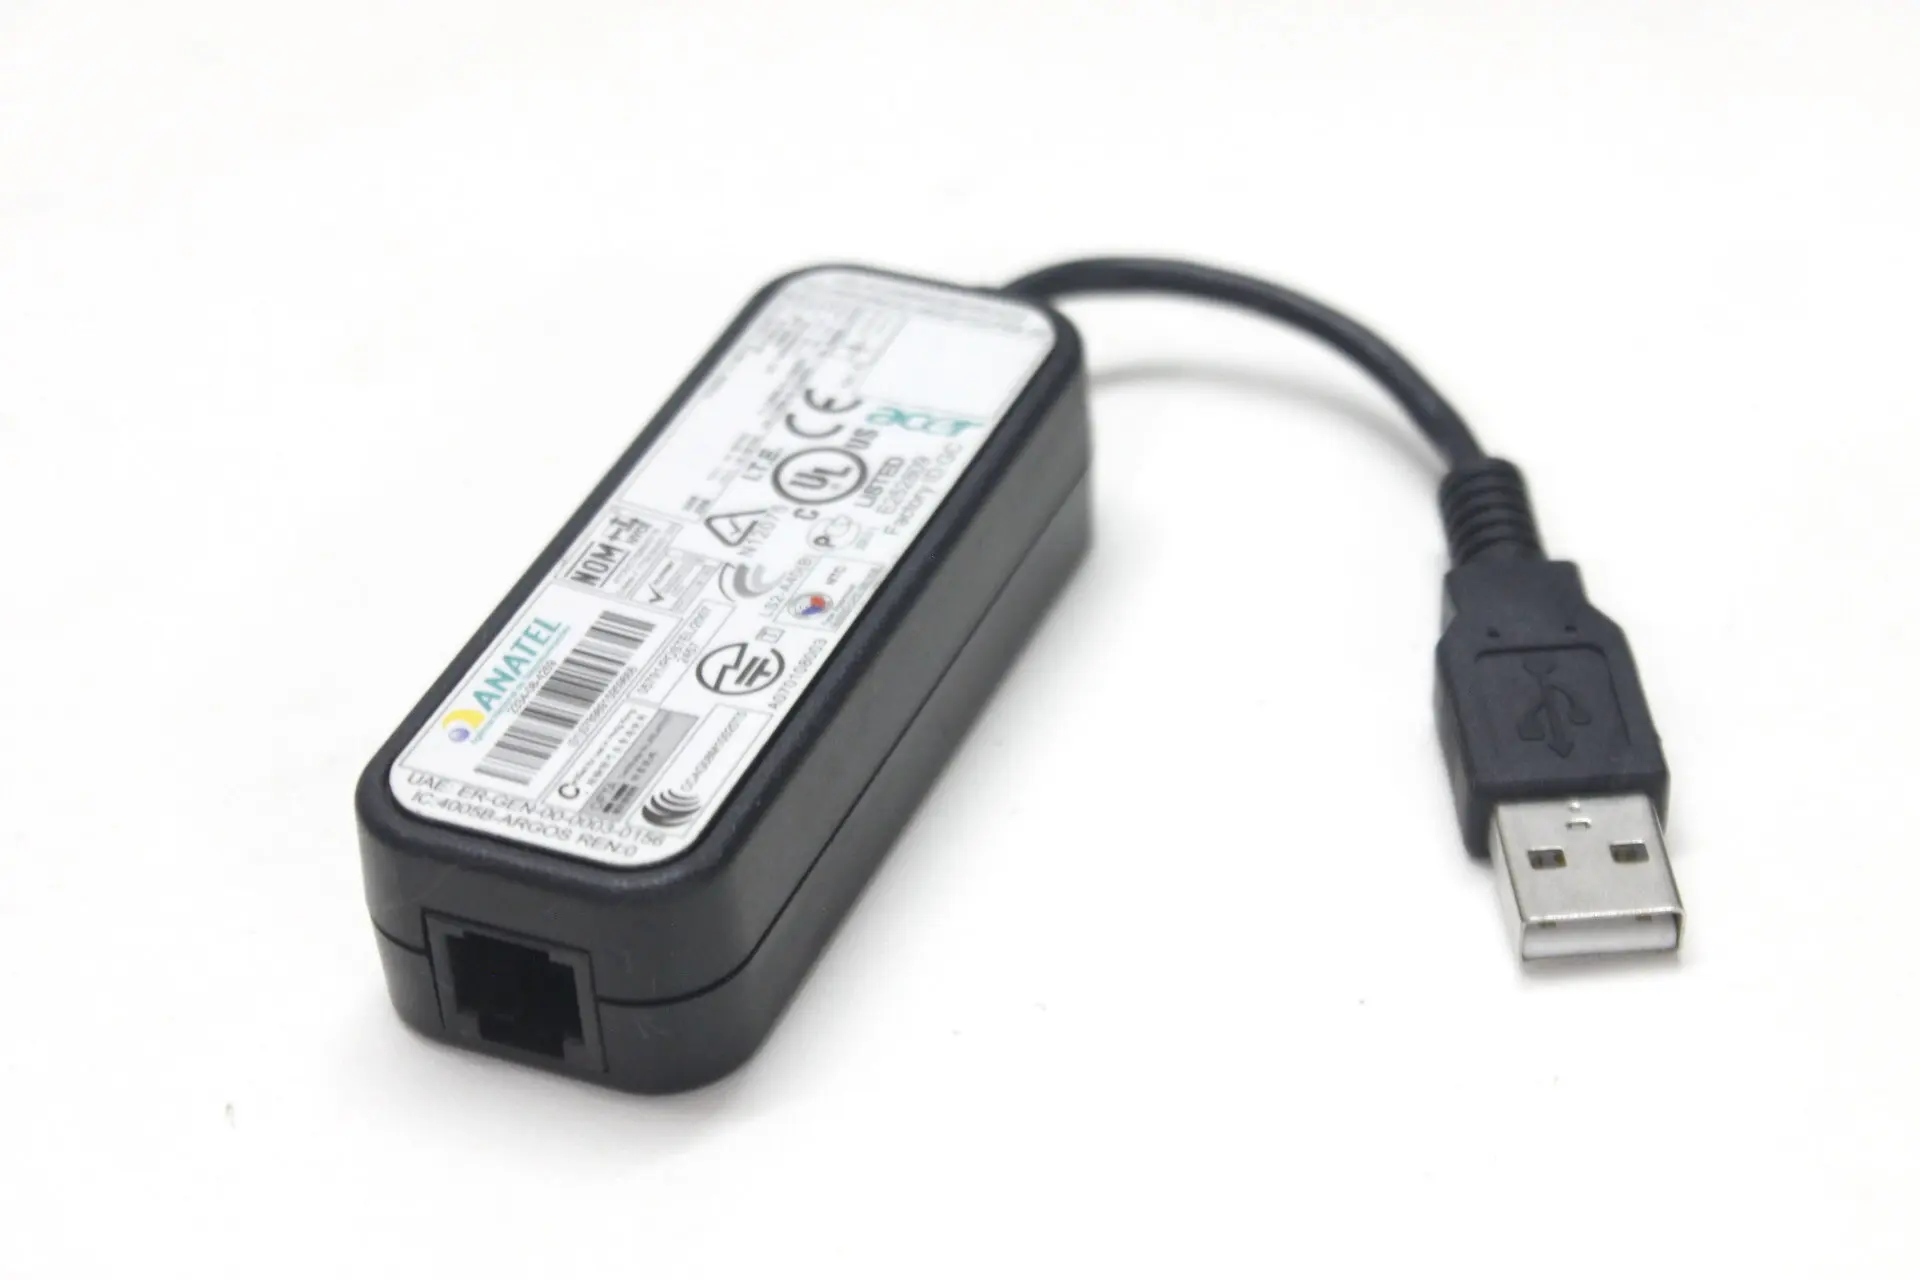 56K USB2.0 Modem Dial-Up and Fax Modem V.92 USB Mini External Modem Adapter win10 free driver